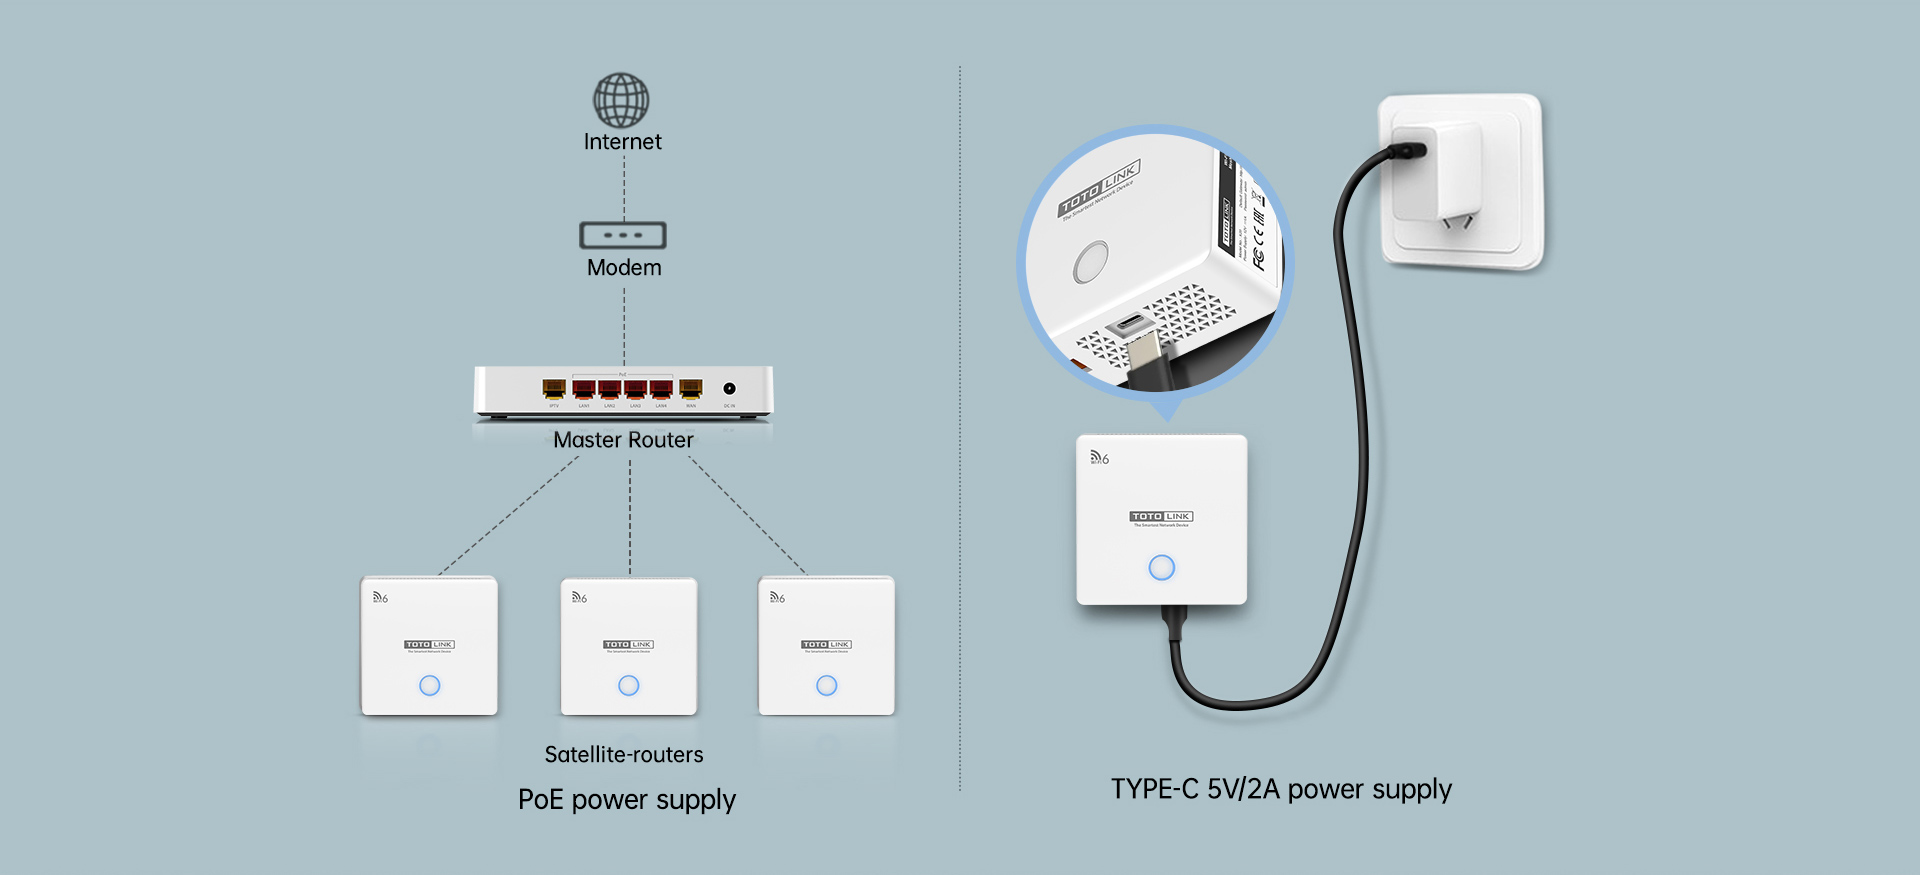 support multiple power supply methods